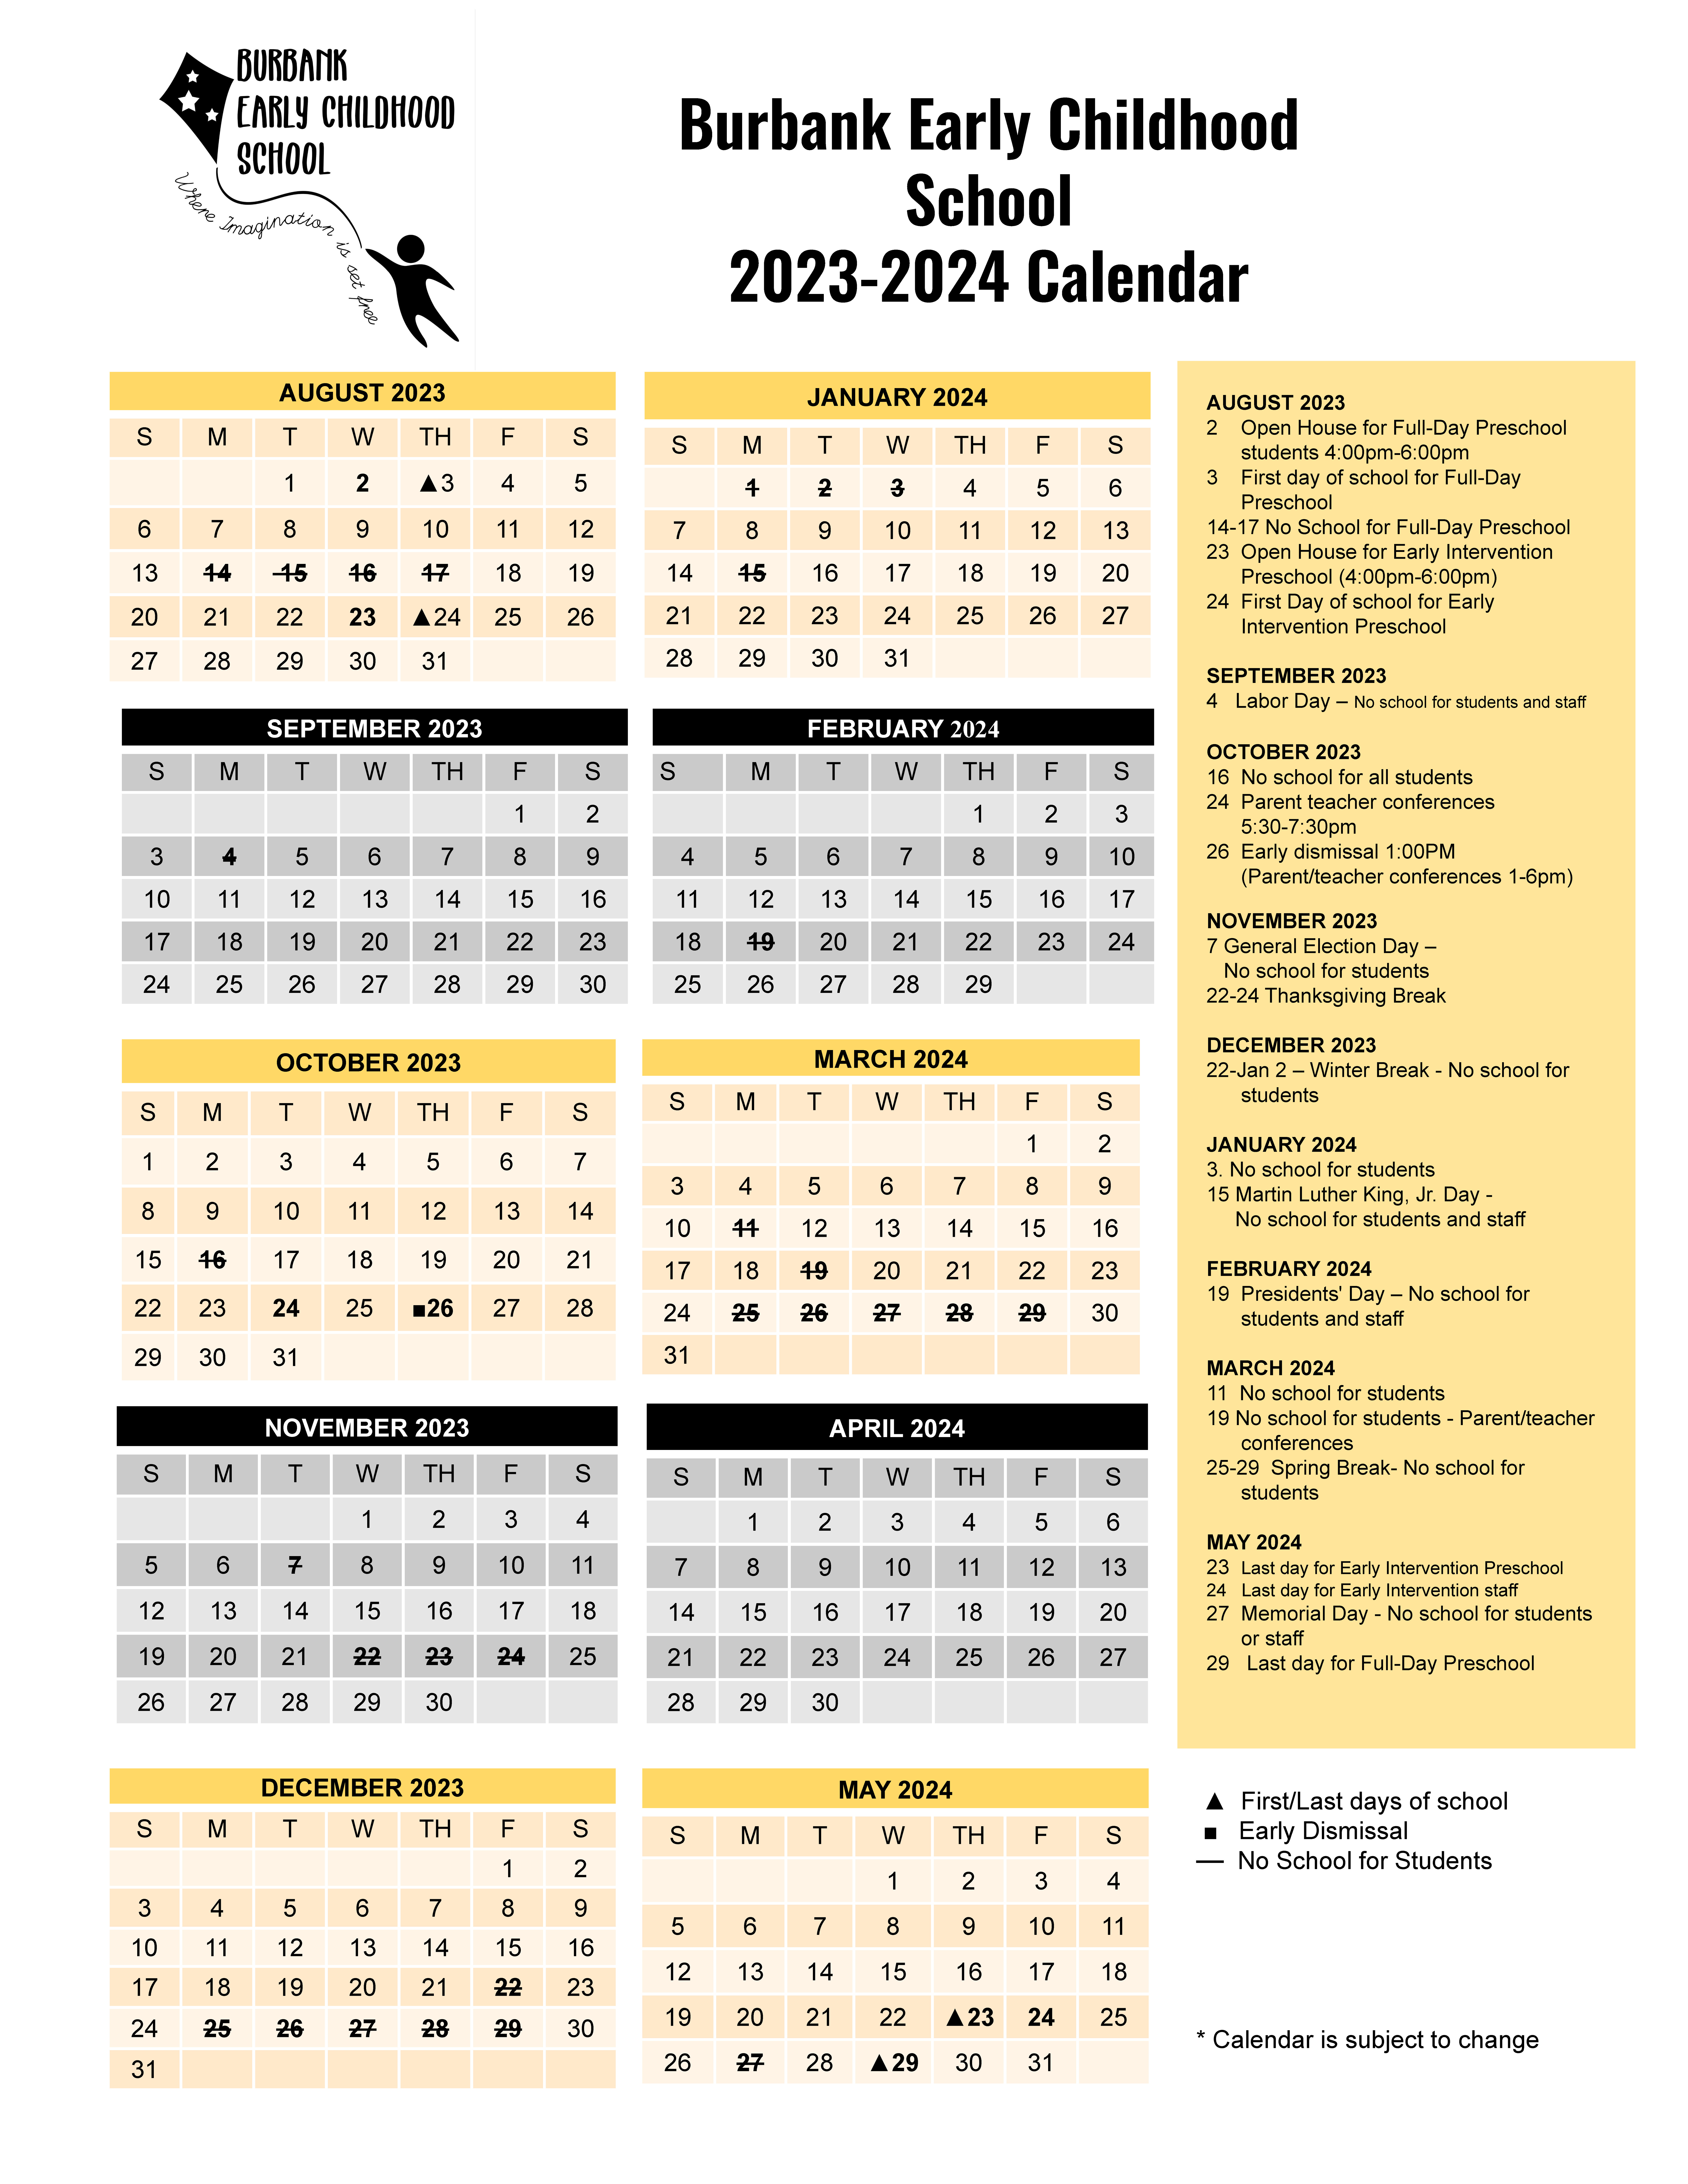 An image of the 2023-2024 school year calendar for Burbank